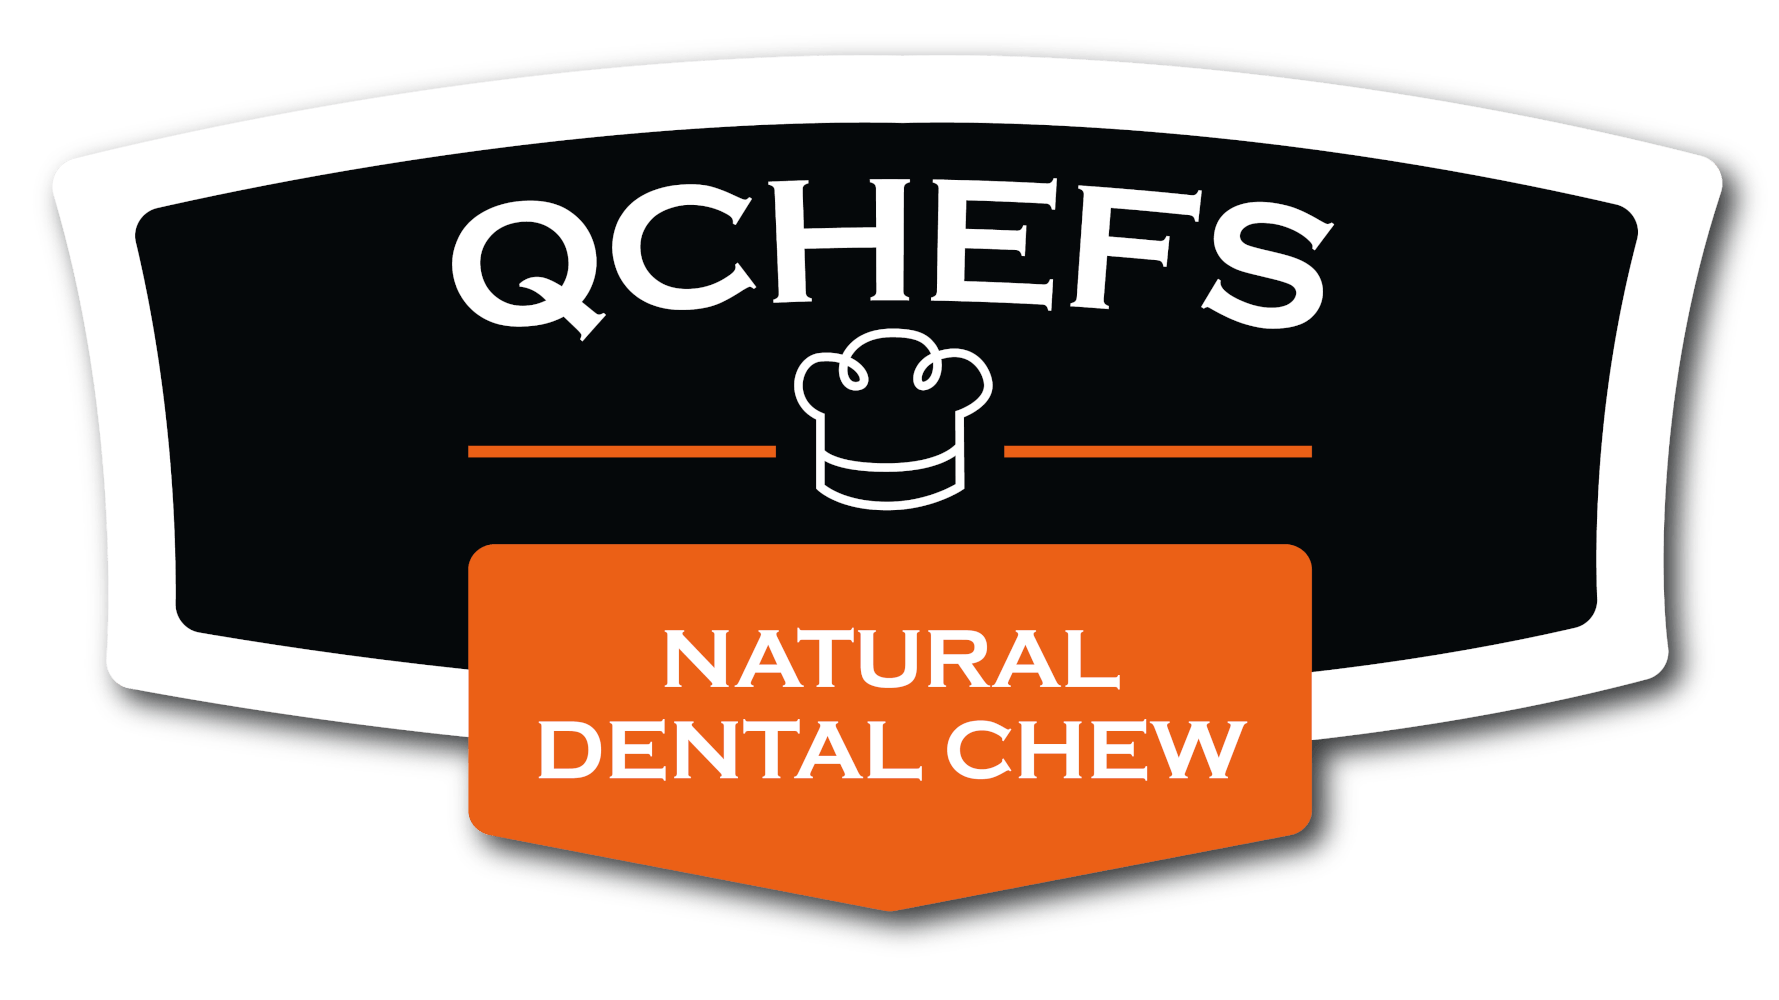 QCHEFS natural dental chew